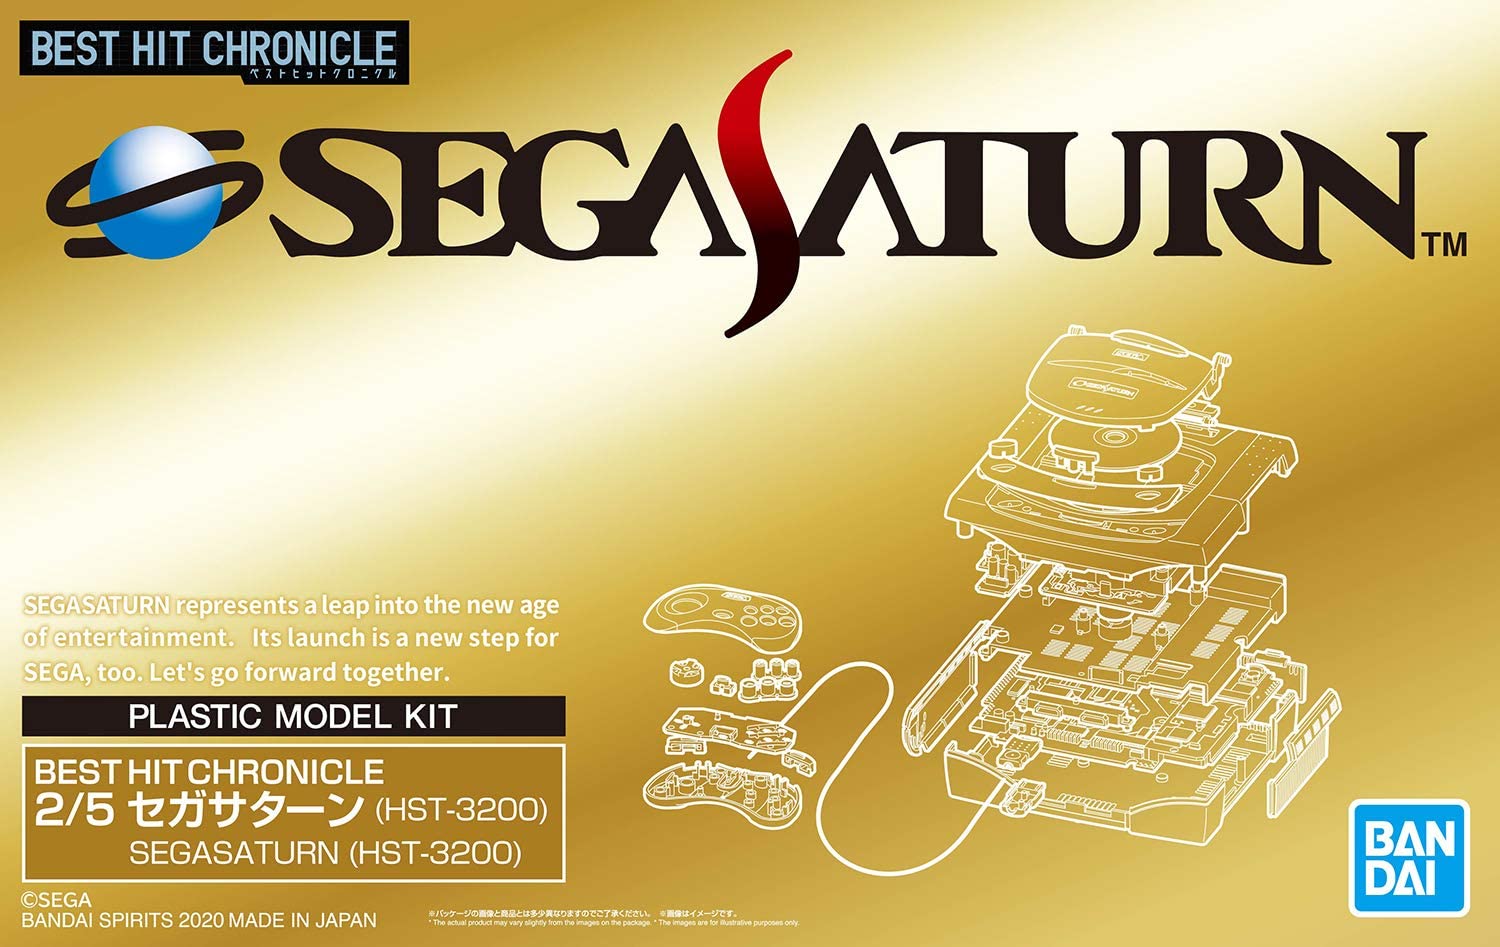 Best Hit Chronicle - Sega Saturn (HST-3200)